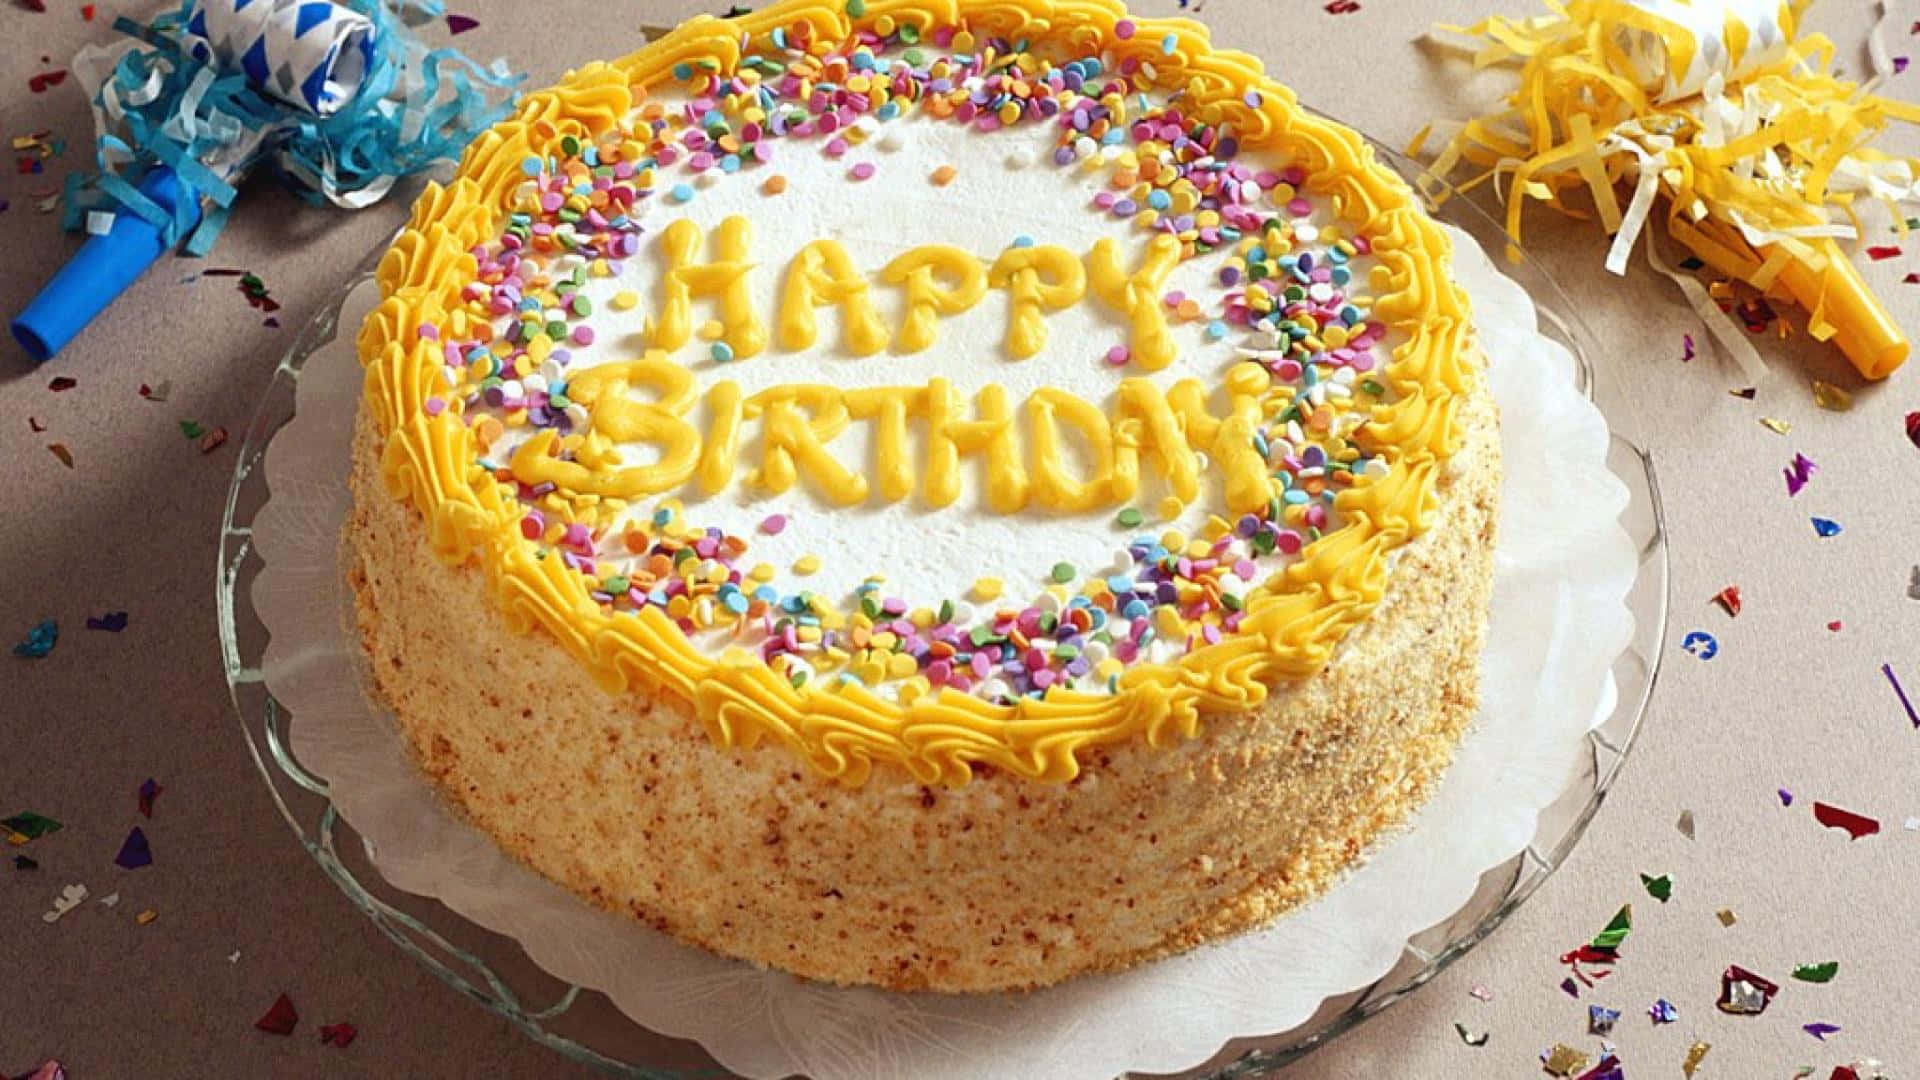 Enjoy your slice of cake!